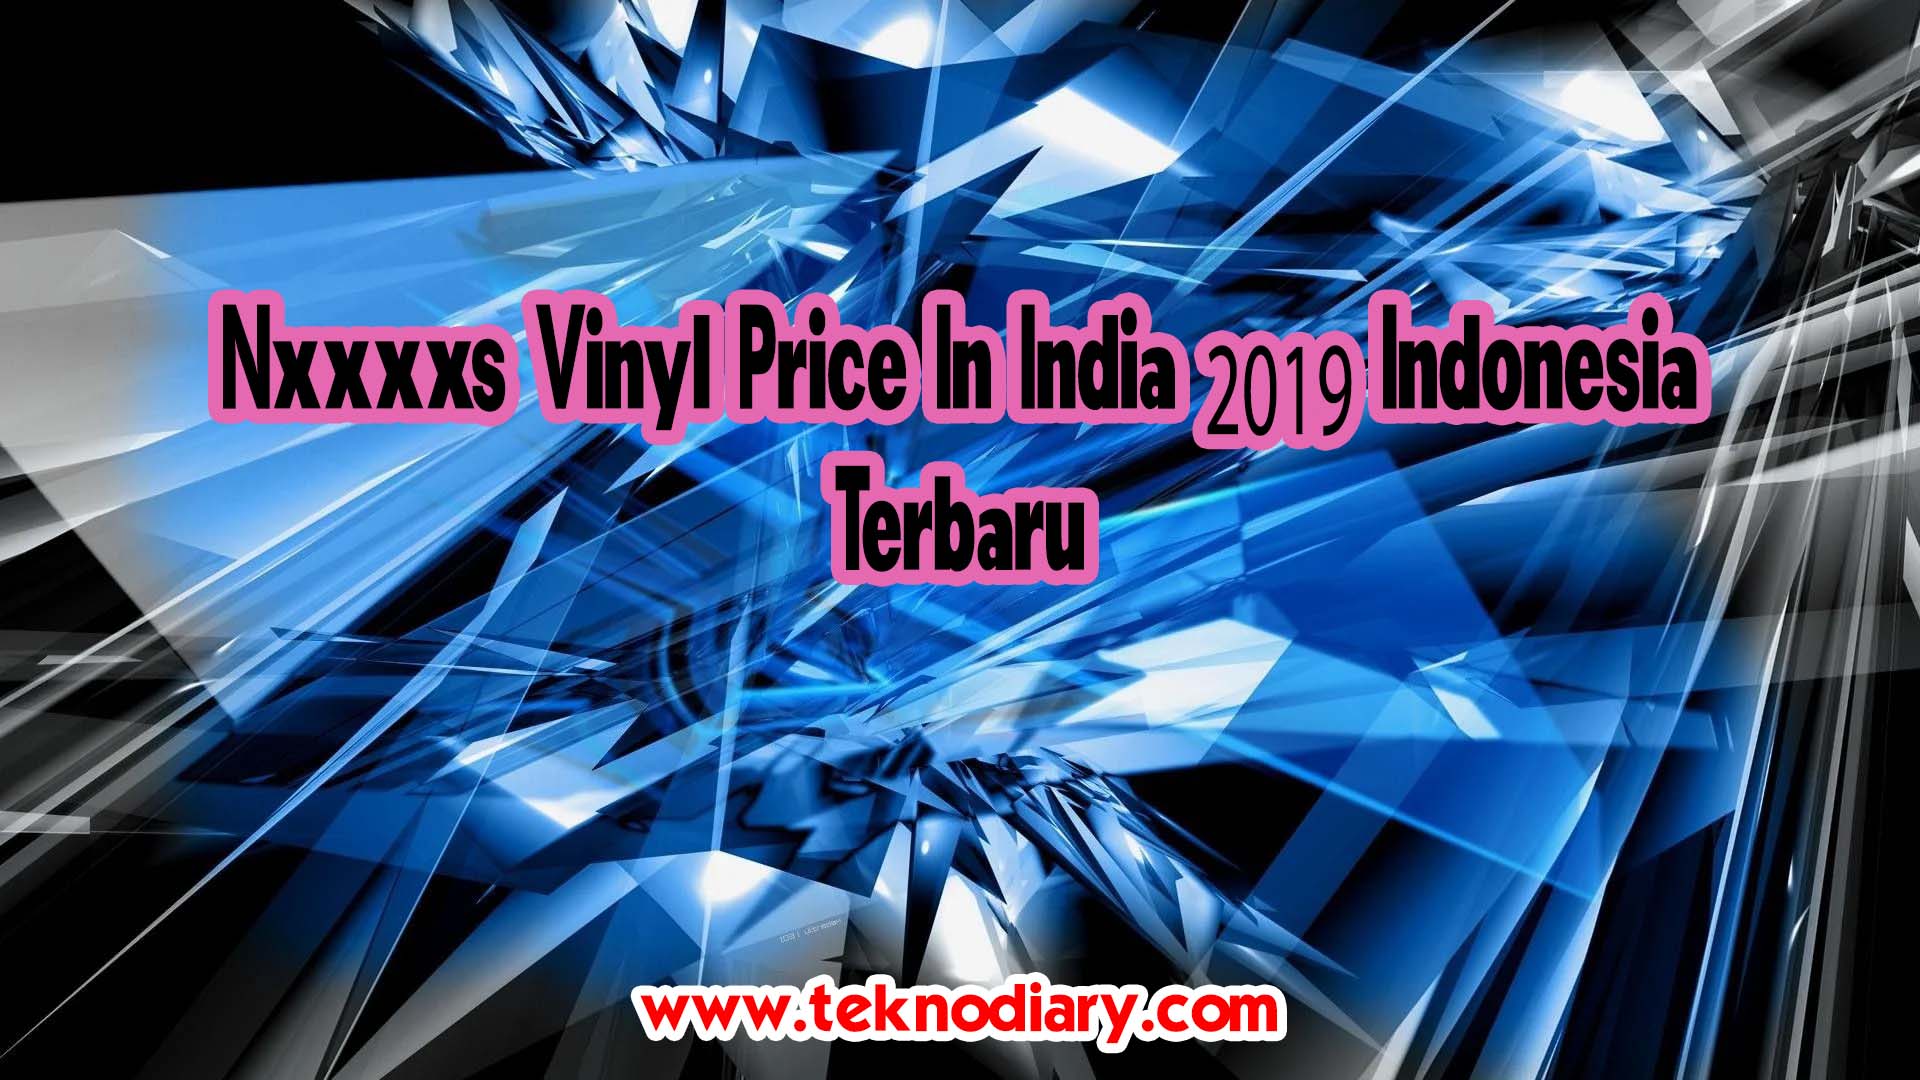 Nxxxxs vinyl price in india 2019 indonesia terbaru